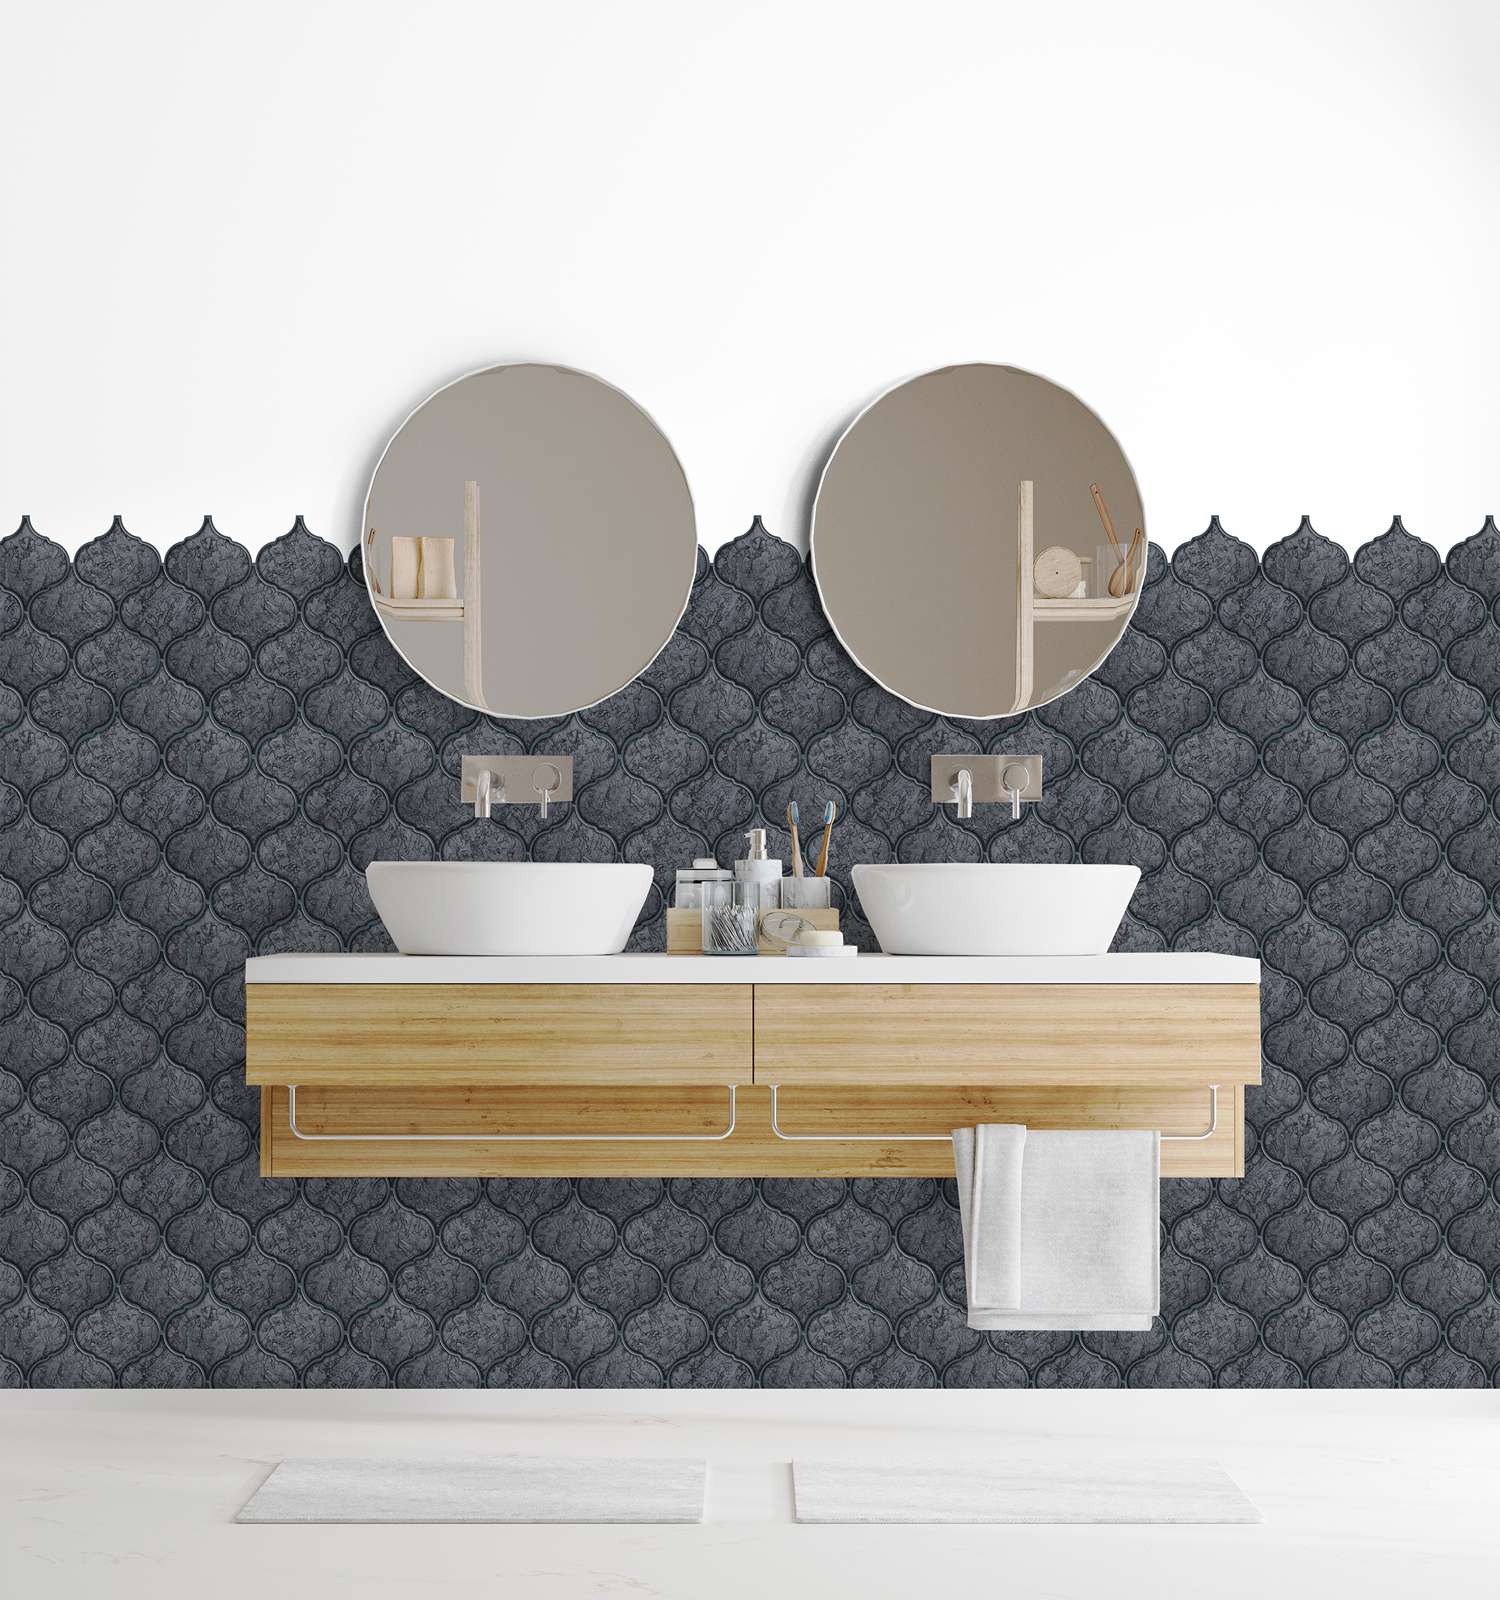 Black Arabesque Peel and Stick Wall Tile from Mosaicowall | Kitchen Backsplash Tiles